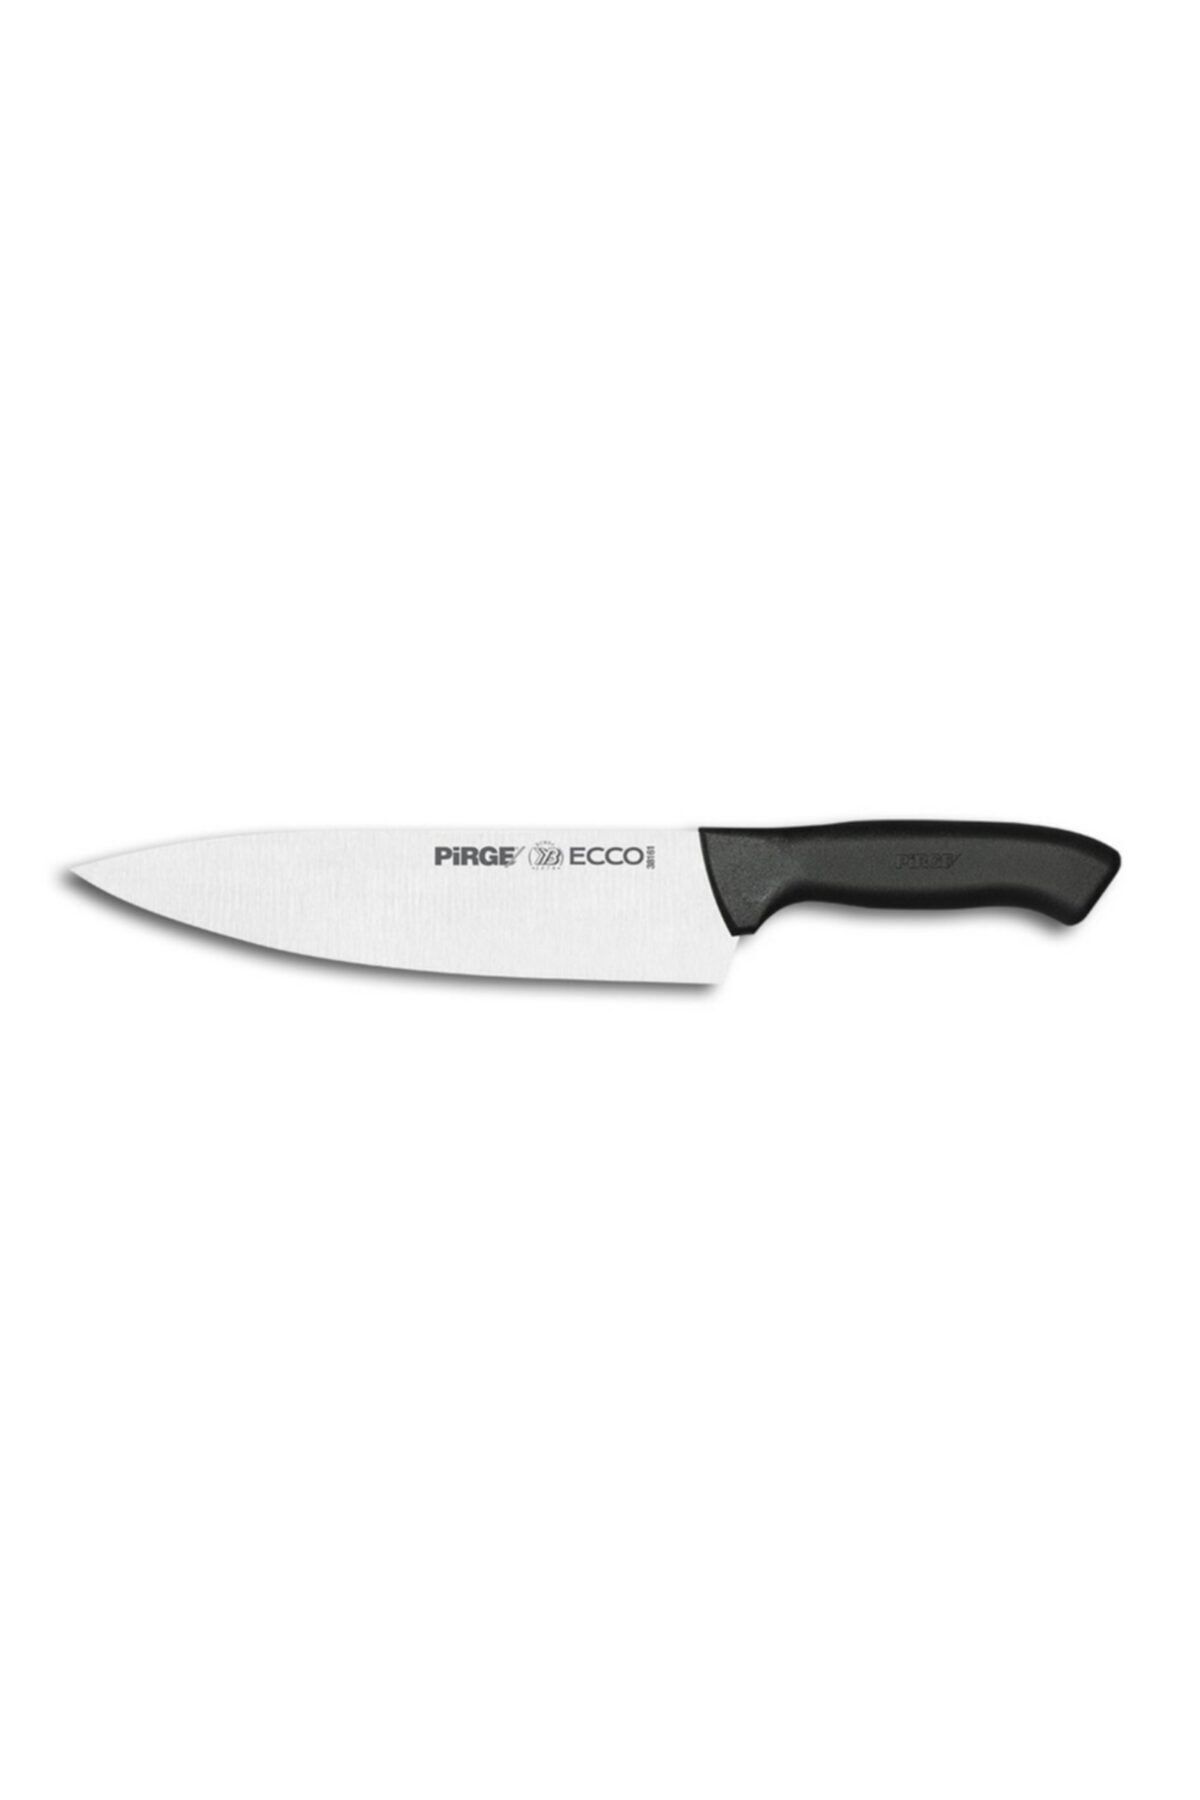 Pirge Ecco Şef Bıçağı 21 Cm Siyah- 38162